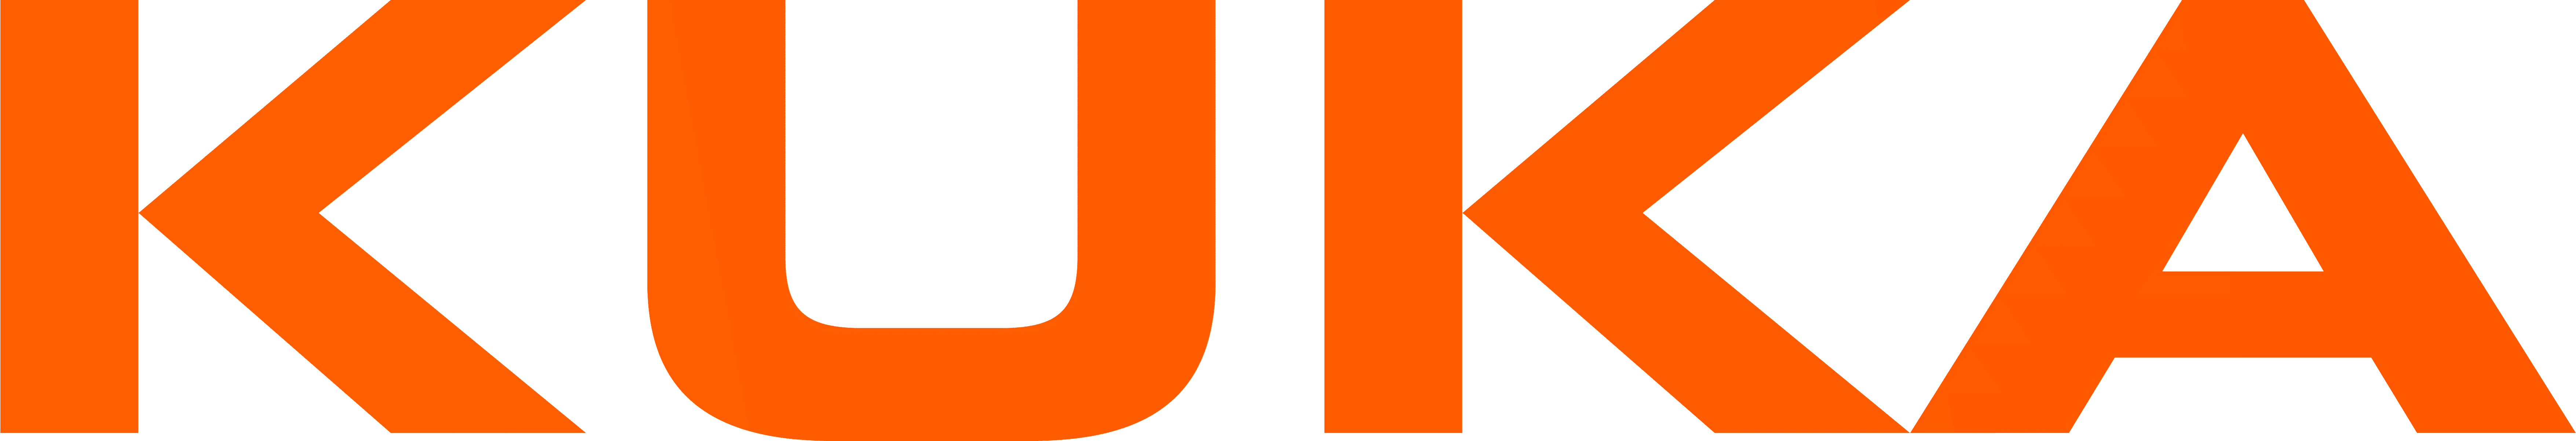 KUKA_Logo_800x260